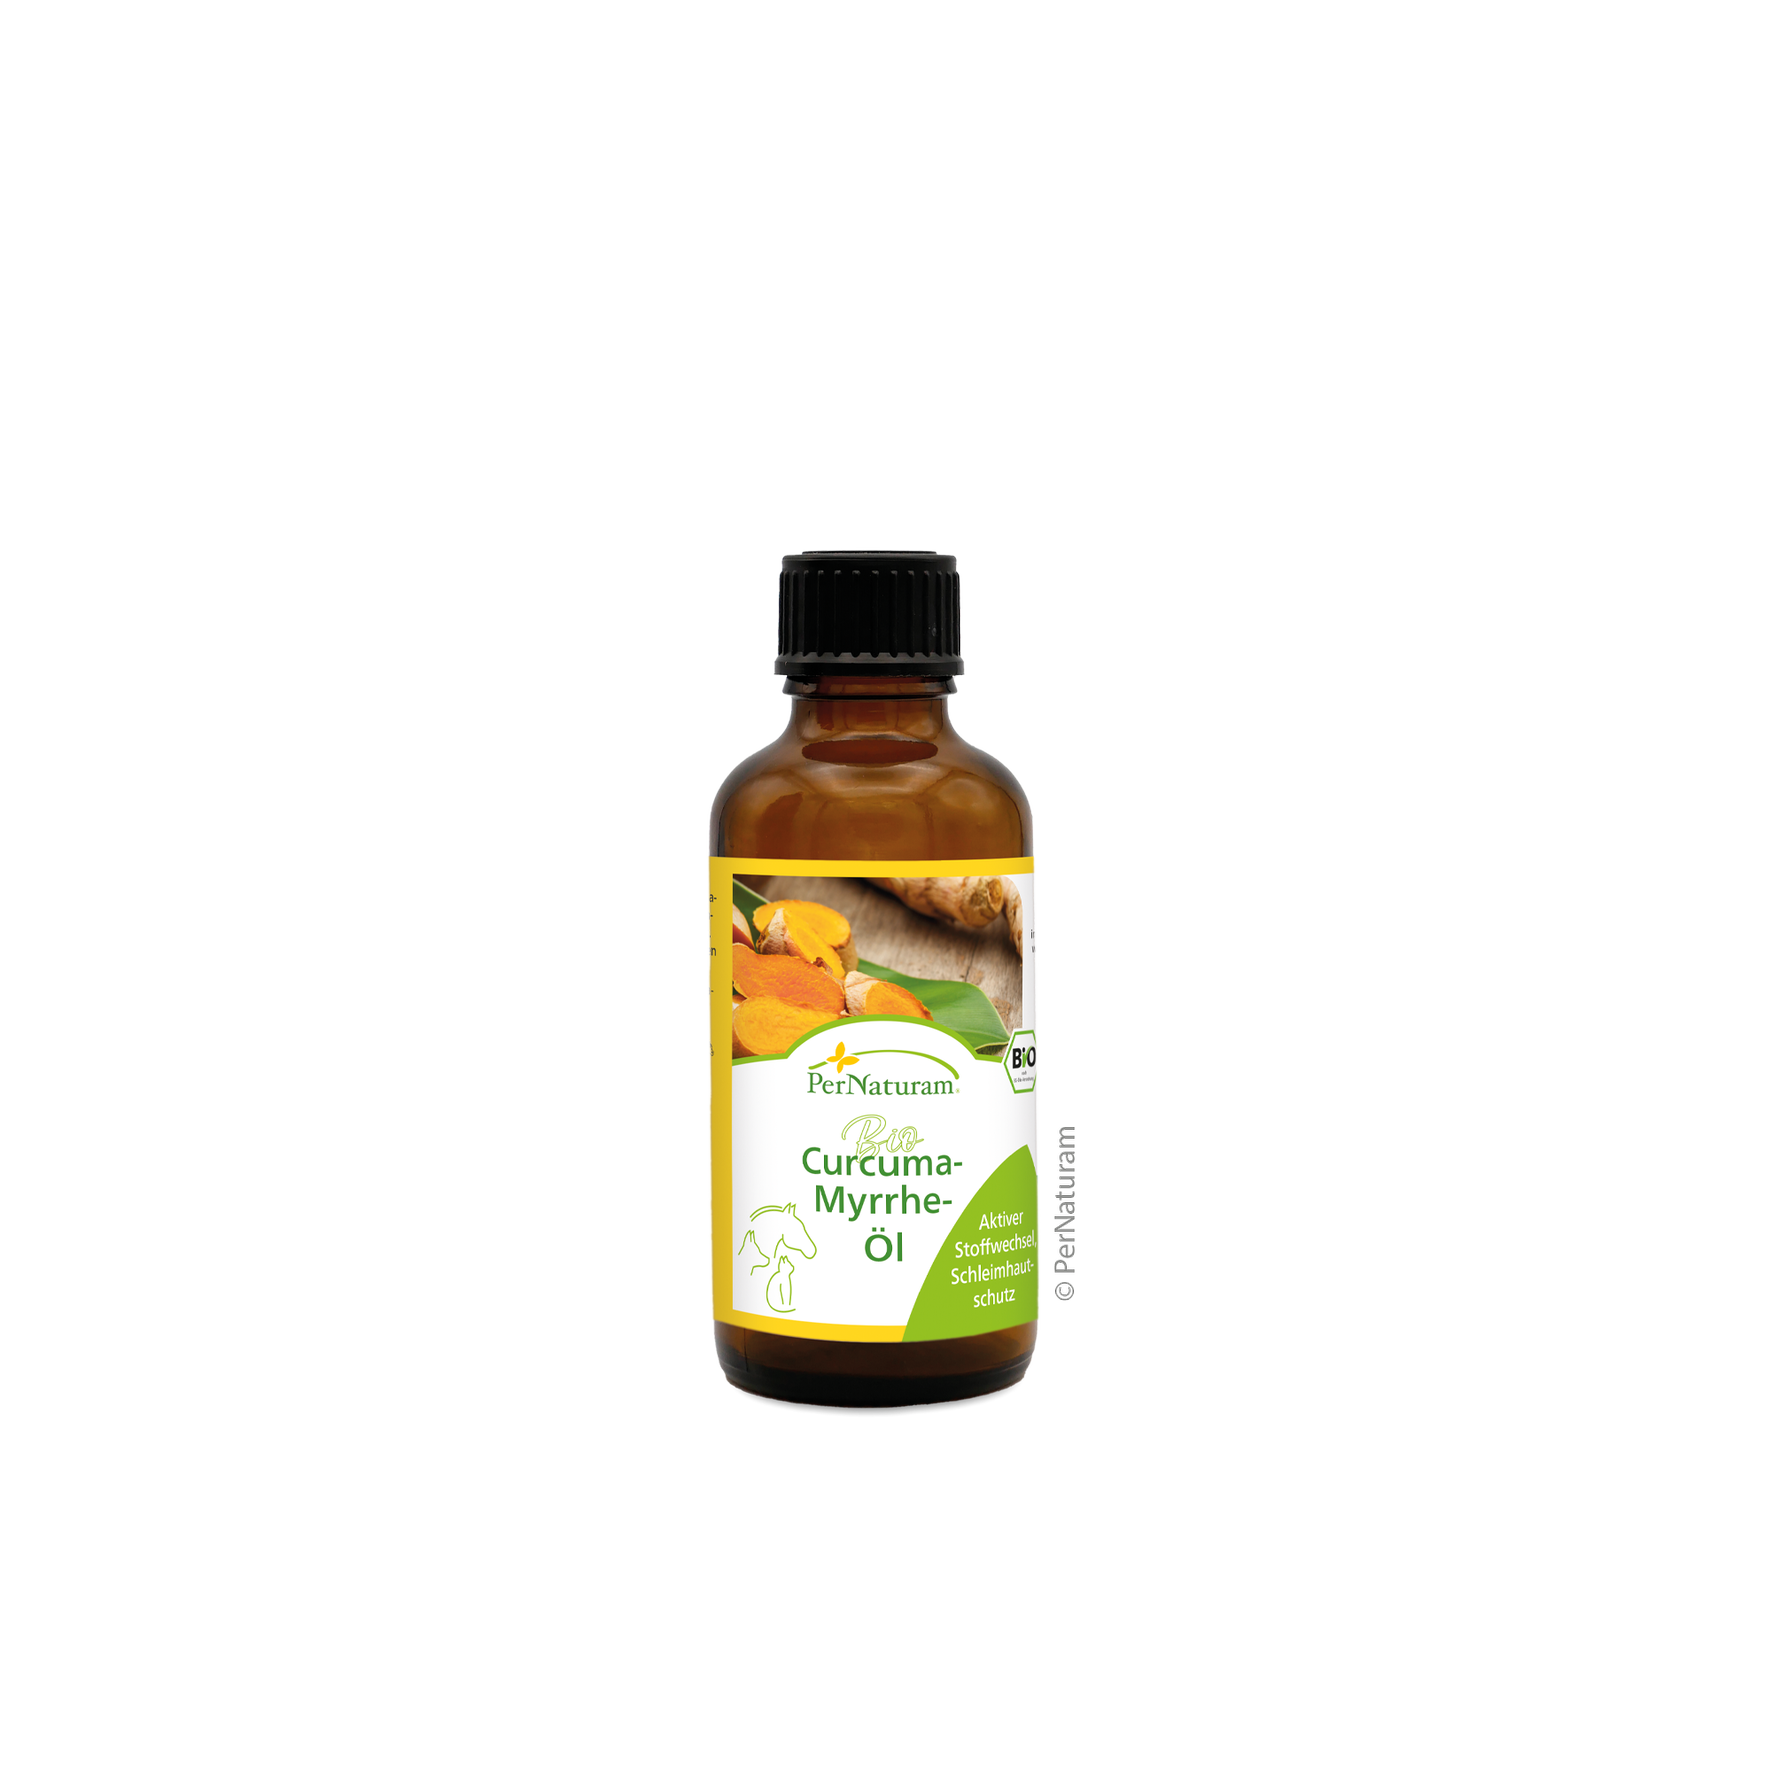 PerNaturam Curcuma-Myrrhe-Öl